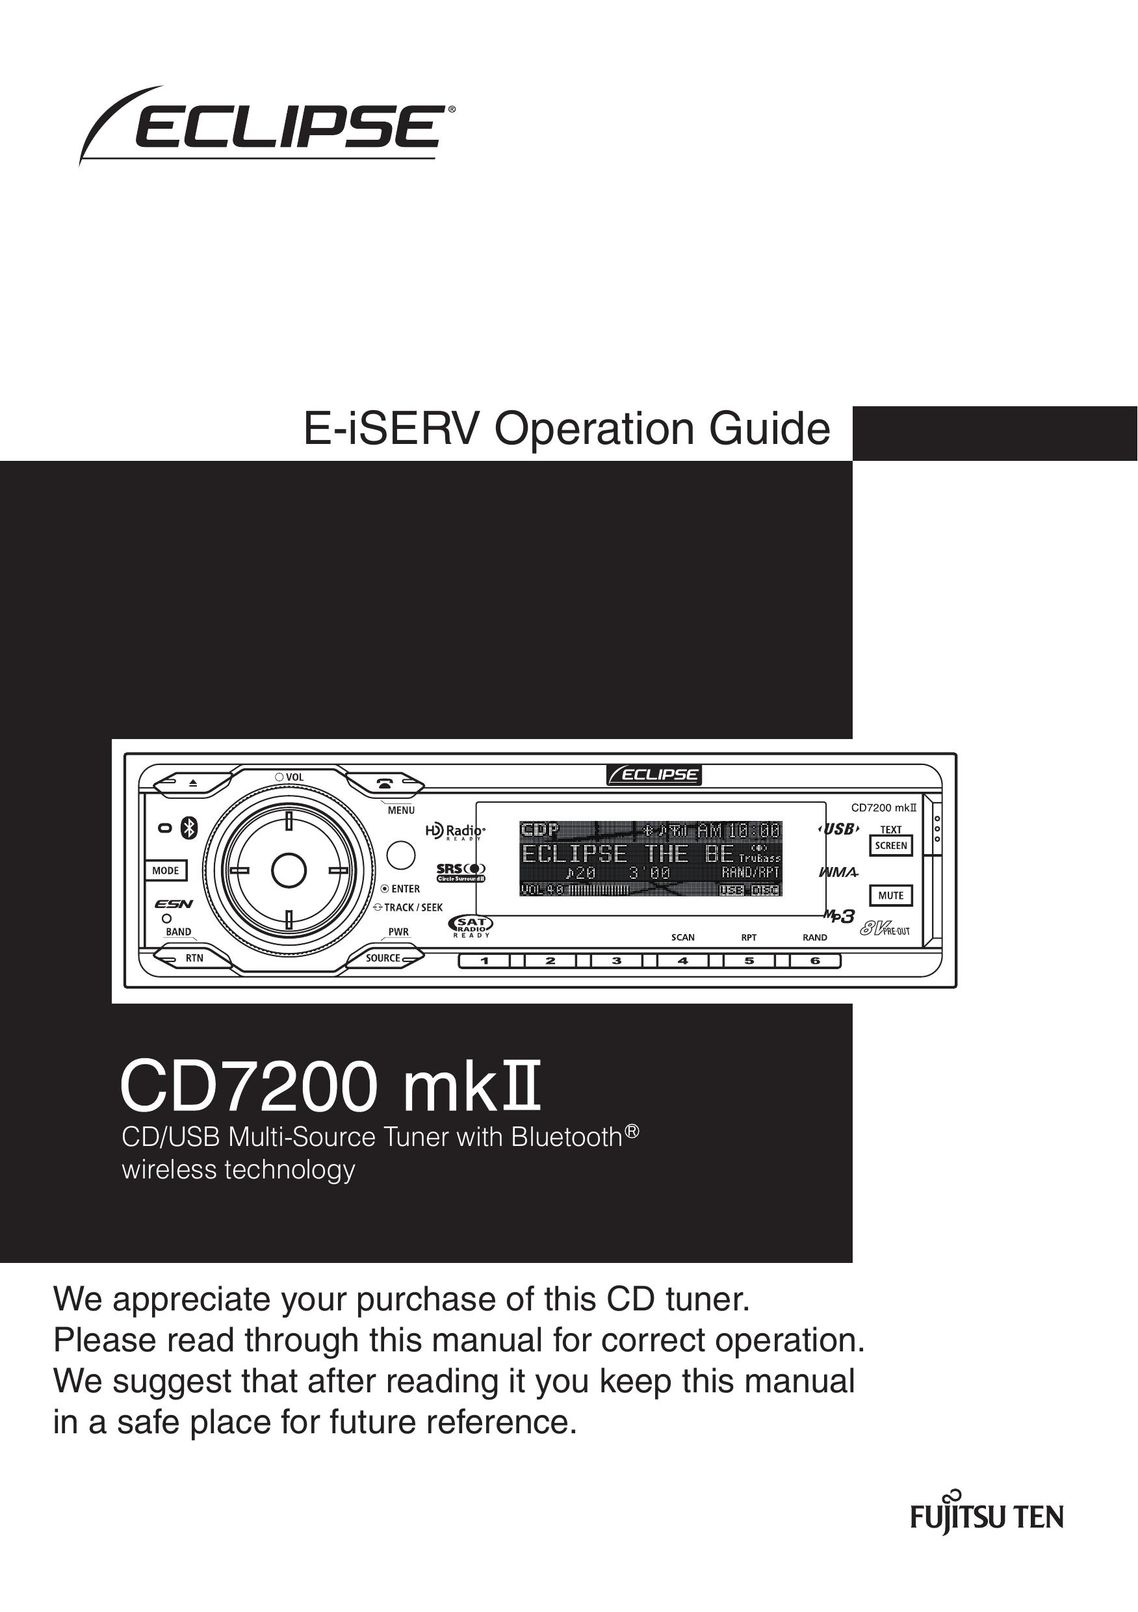 Eclipse - Fujitsu Ten CD7200 mkII Car Stereo System User Manual